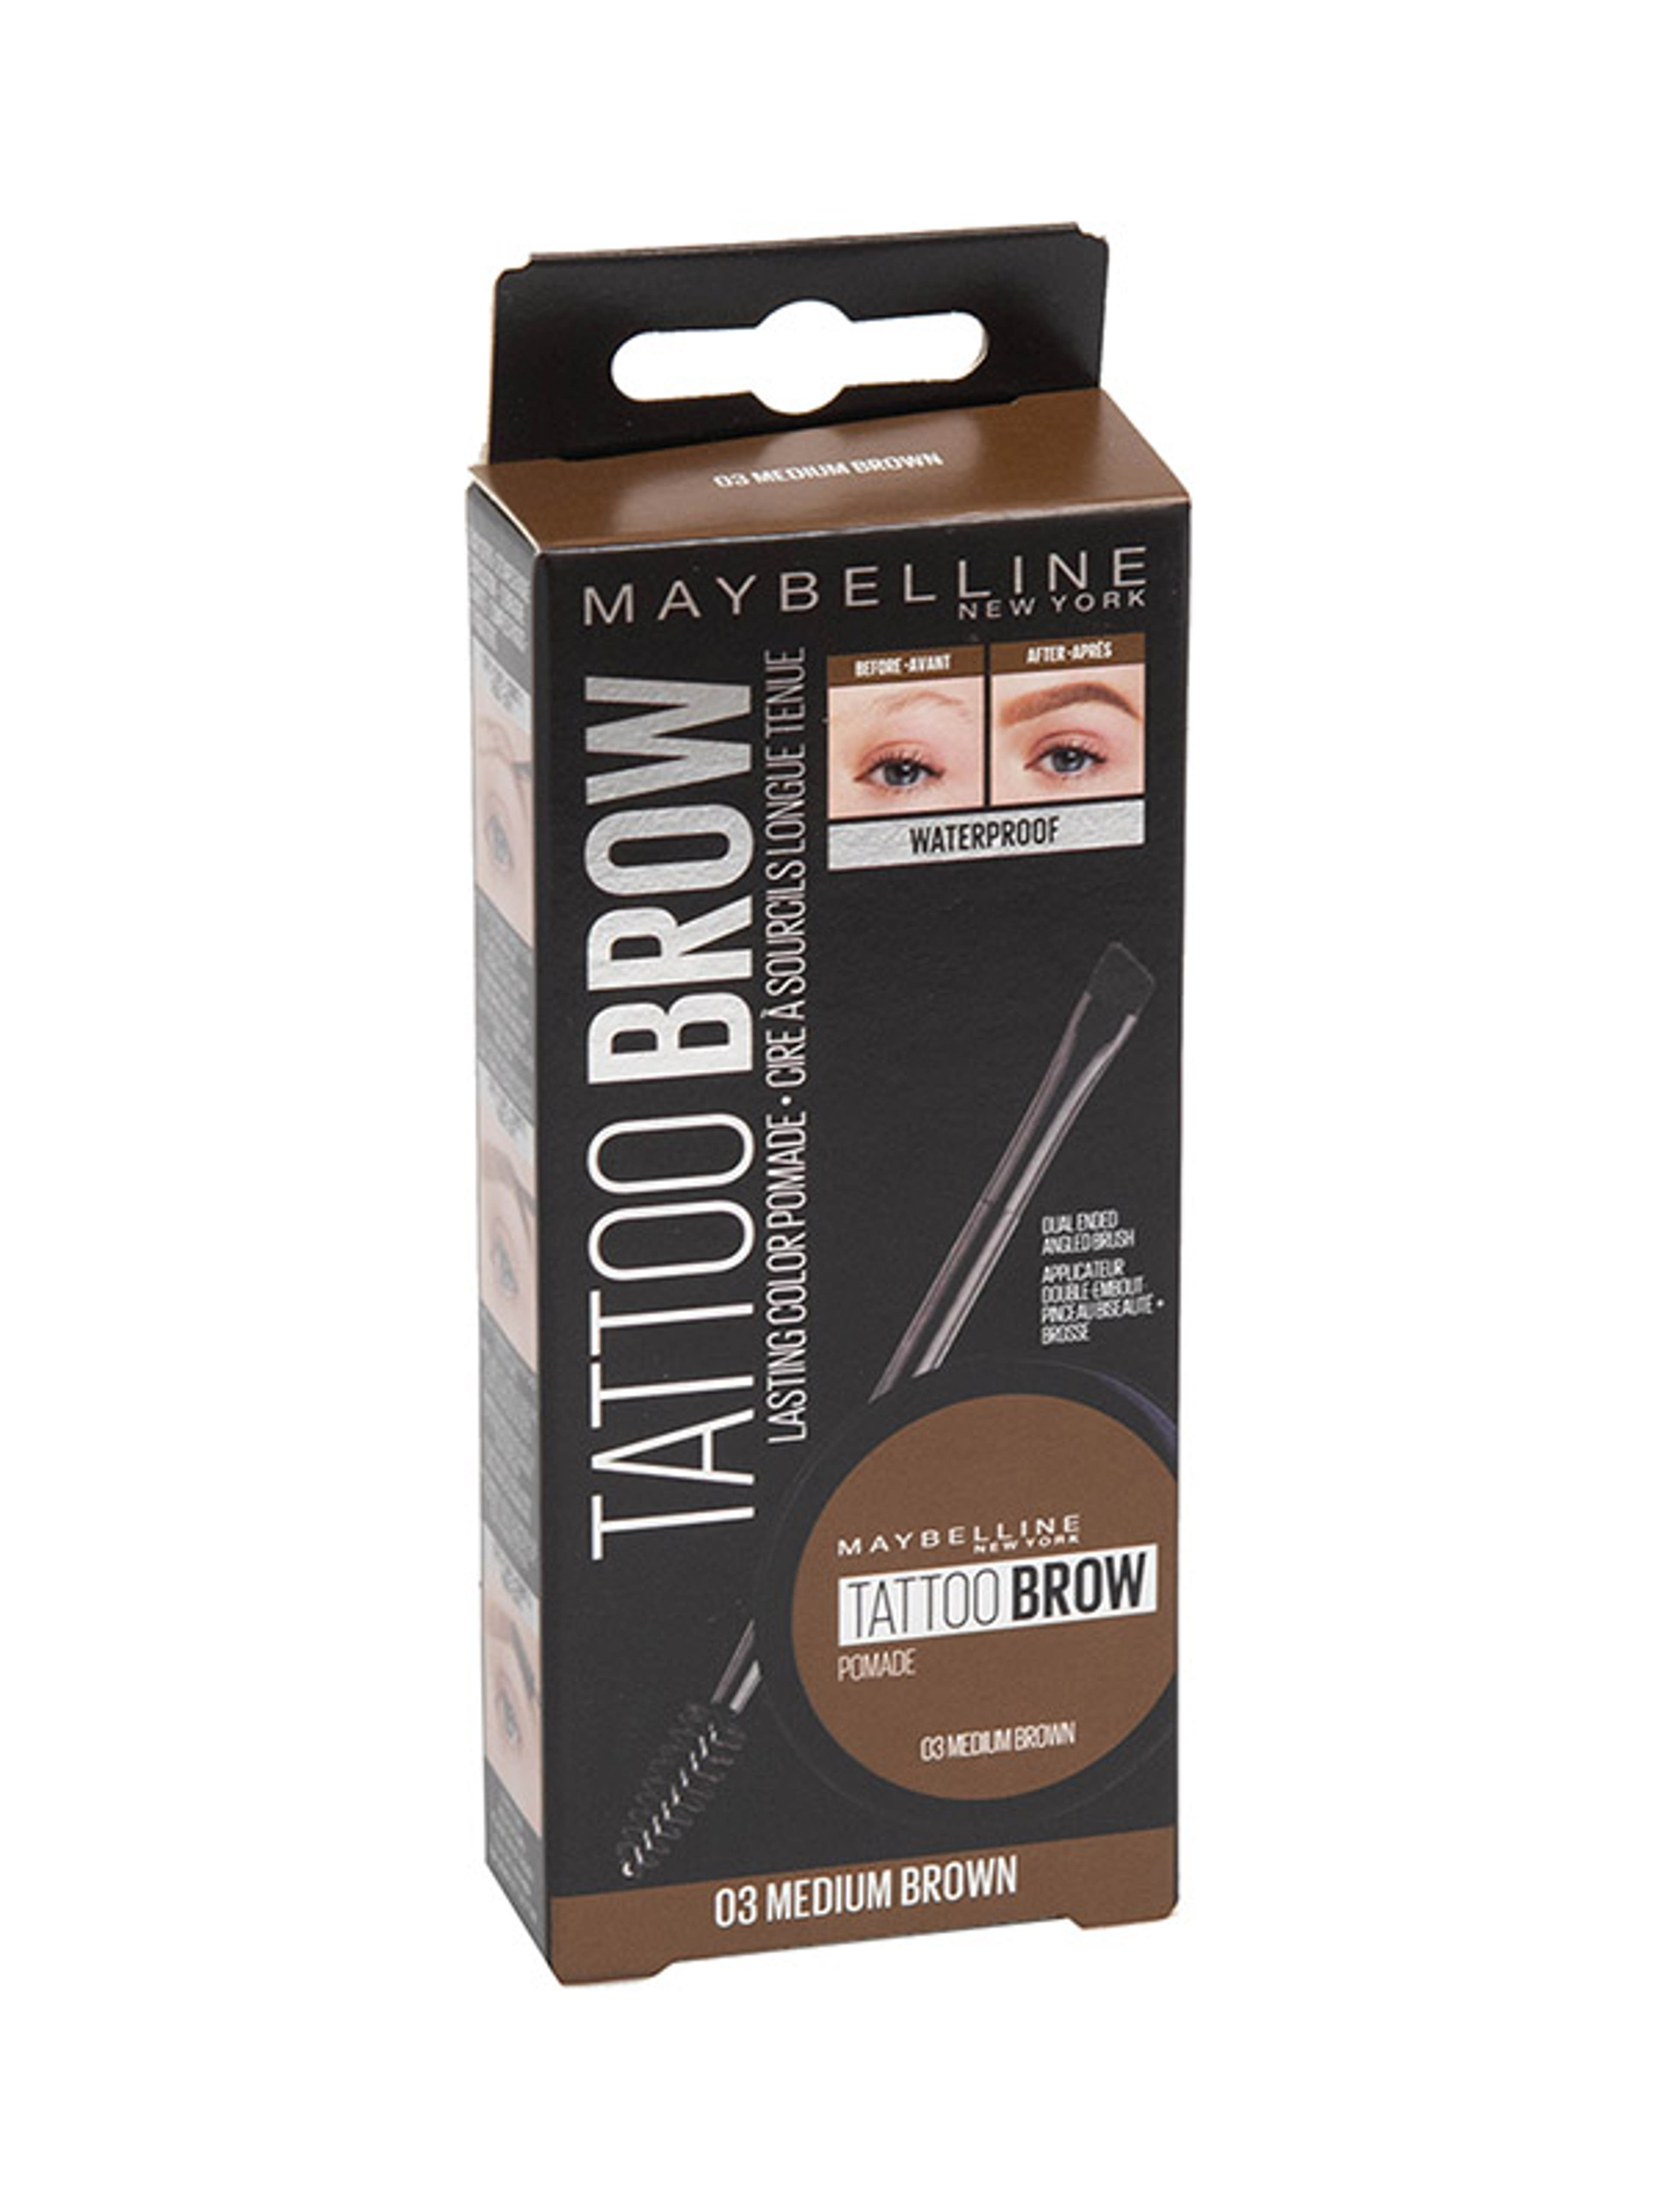 Maybelline Tattoo Brow Pomade géles szemöldökformázó, 03 Medium Brown - 1 db-1